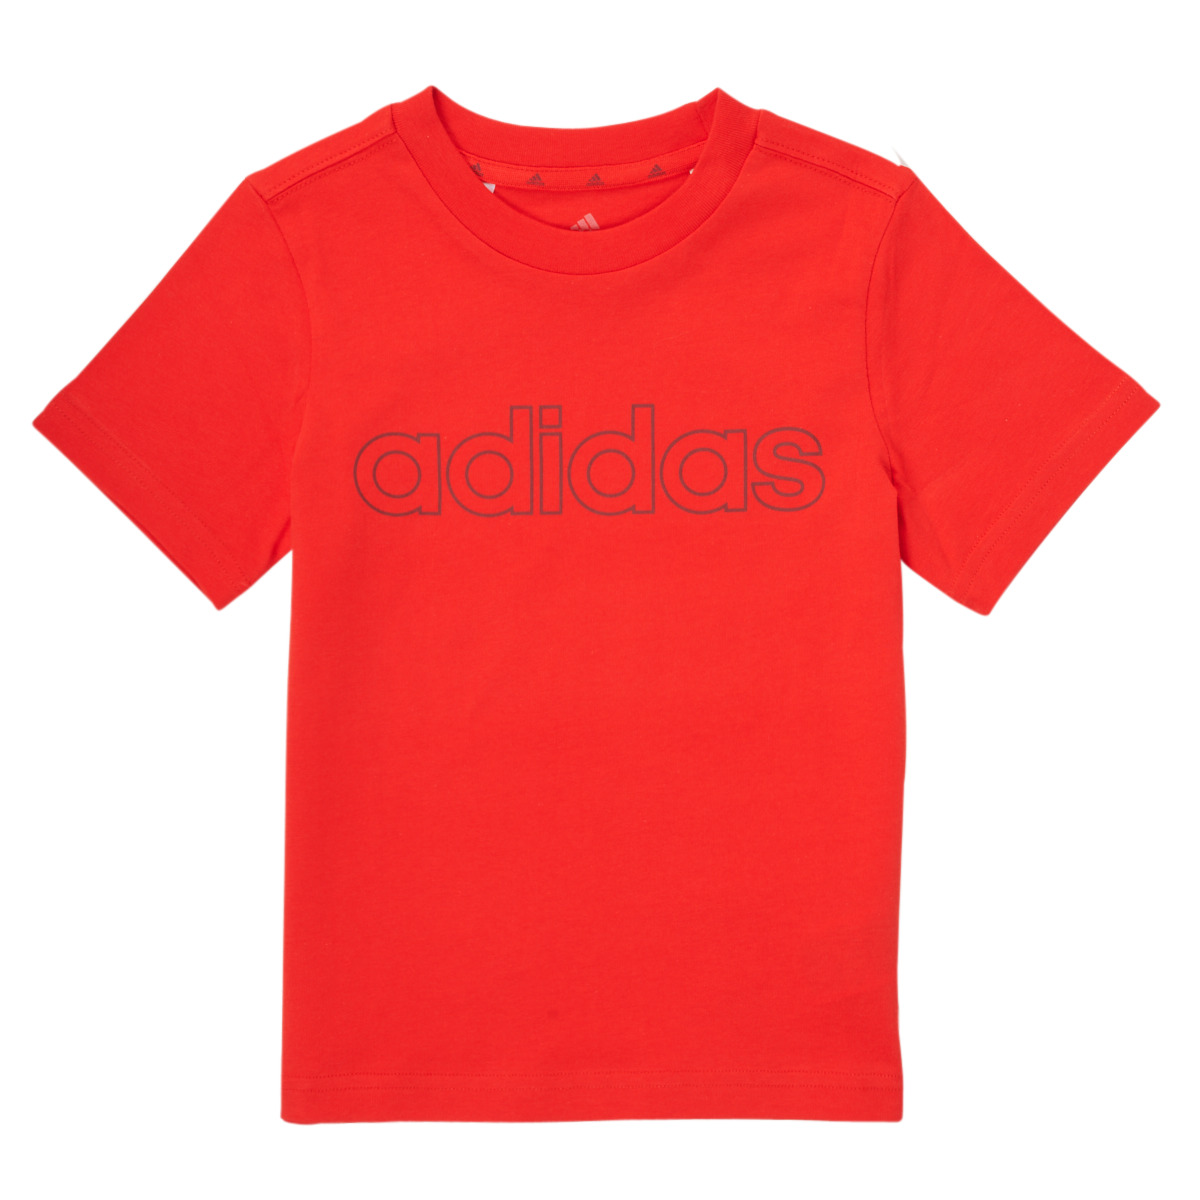 Adidas Sportswear Rouge ELORRI mwyP0KK9